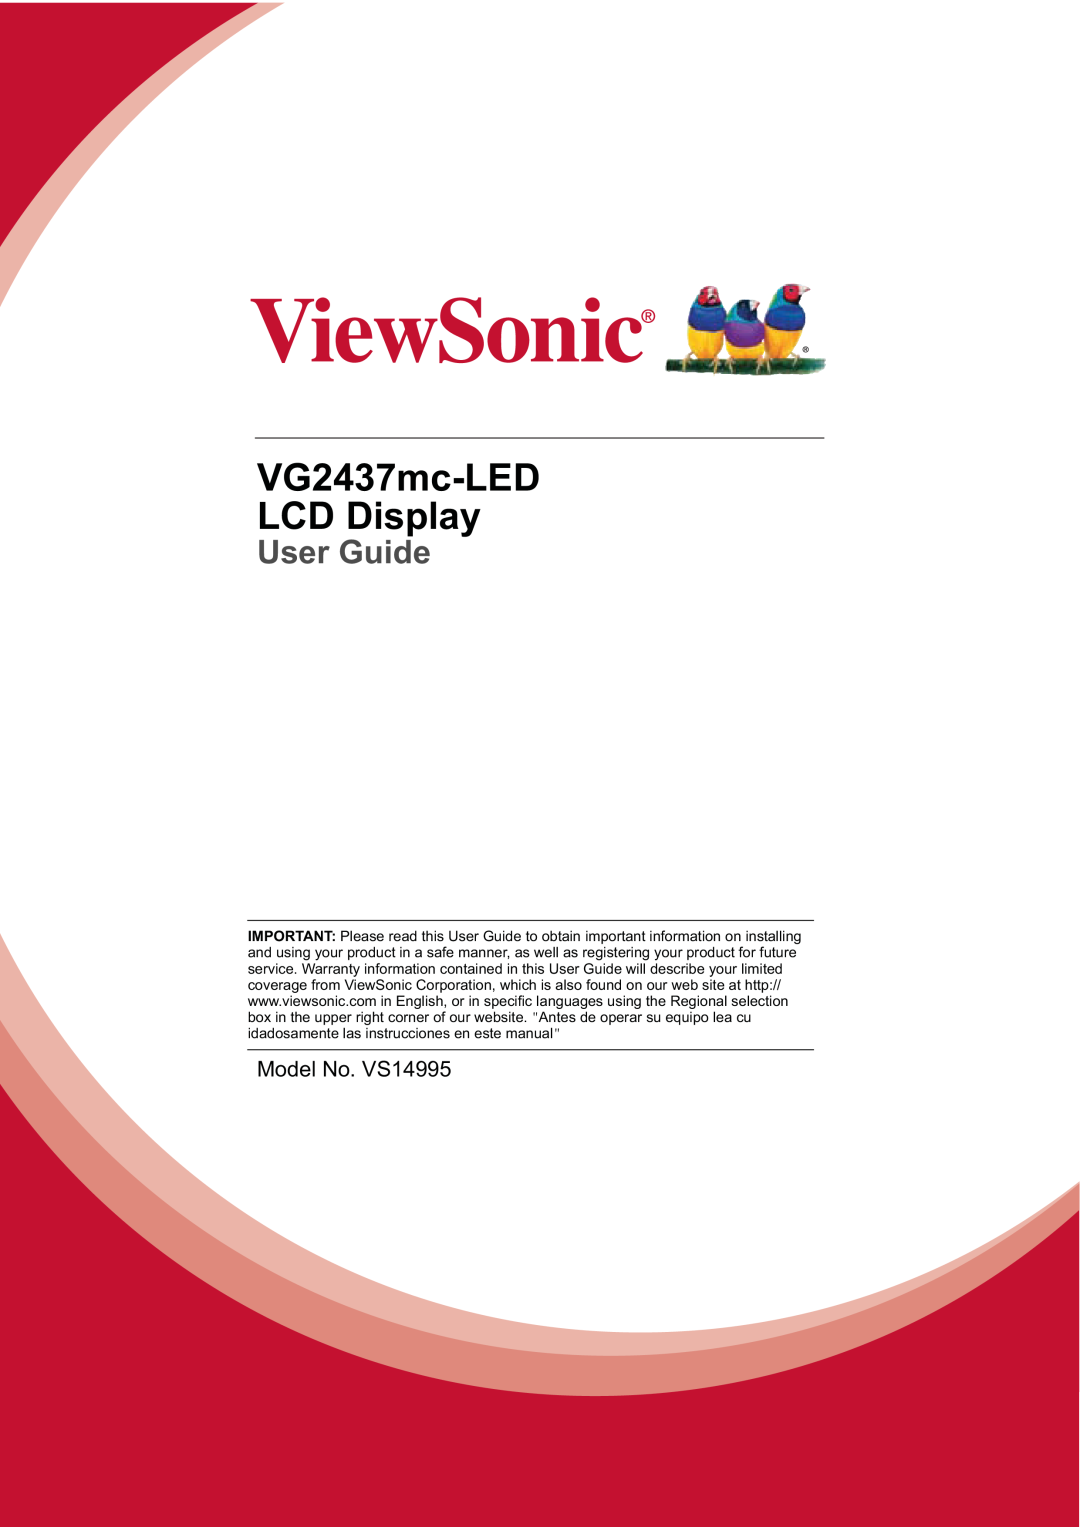 ViewSonic warranty VG2437mc-LED LCD Display, User Guide 